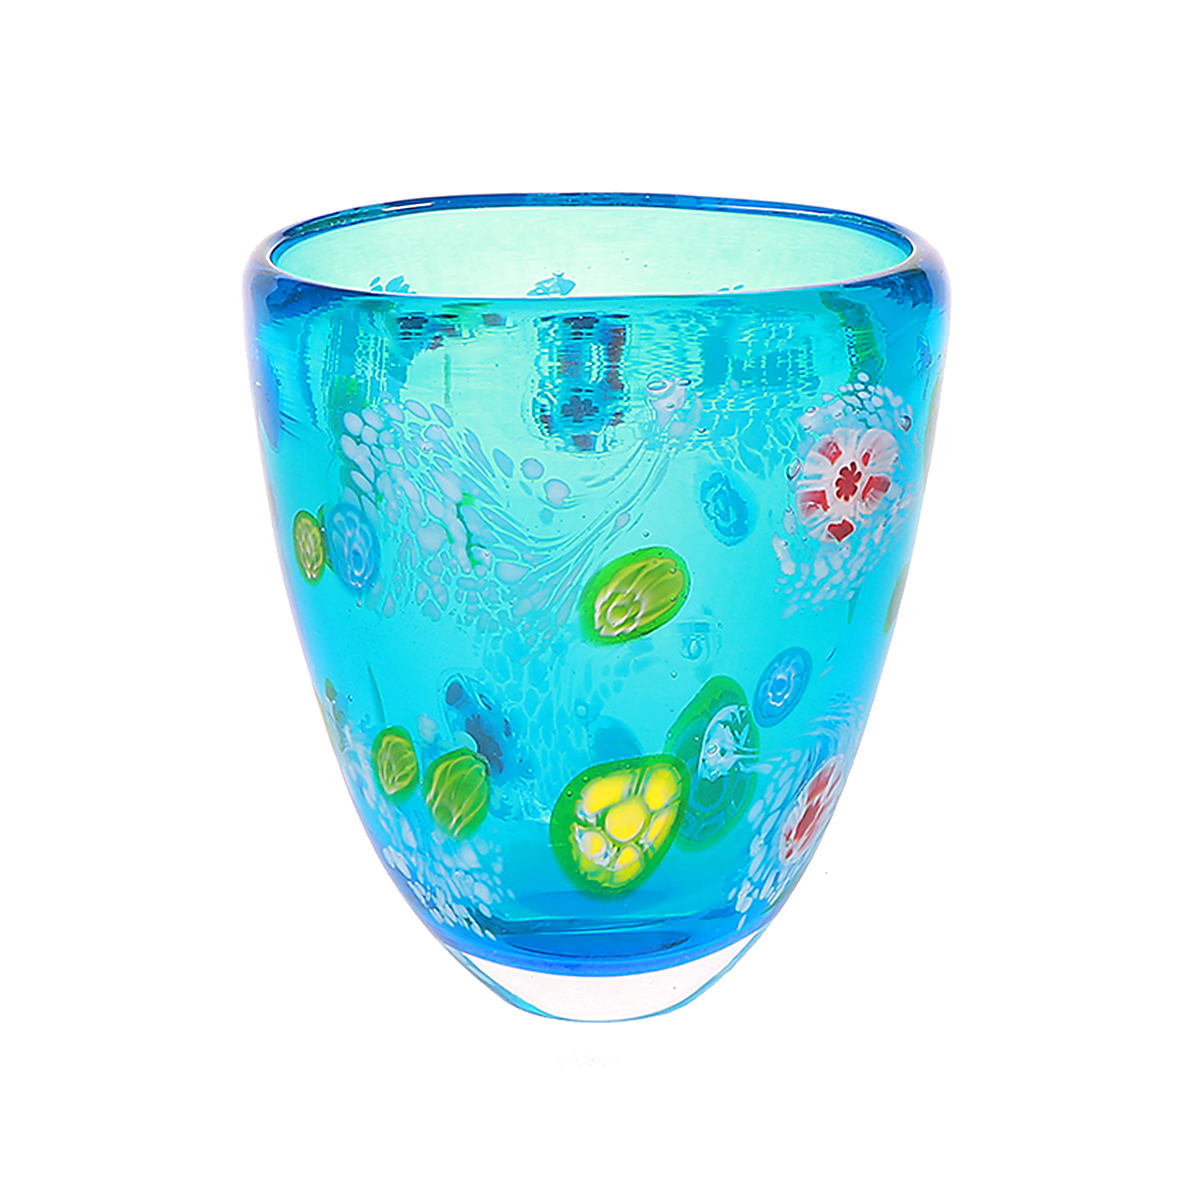 Ваза Art glass Водопад 18 см ваза hakbijl glass cooper 7 5 см серая